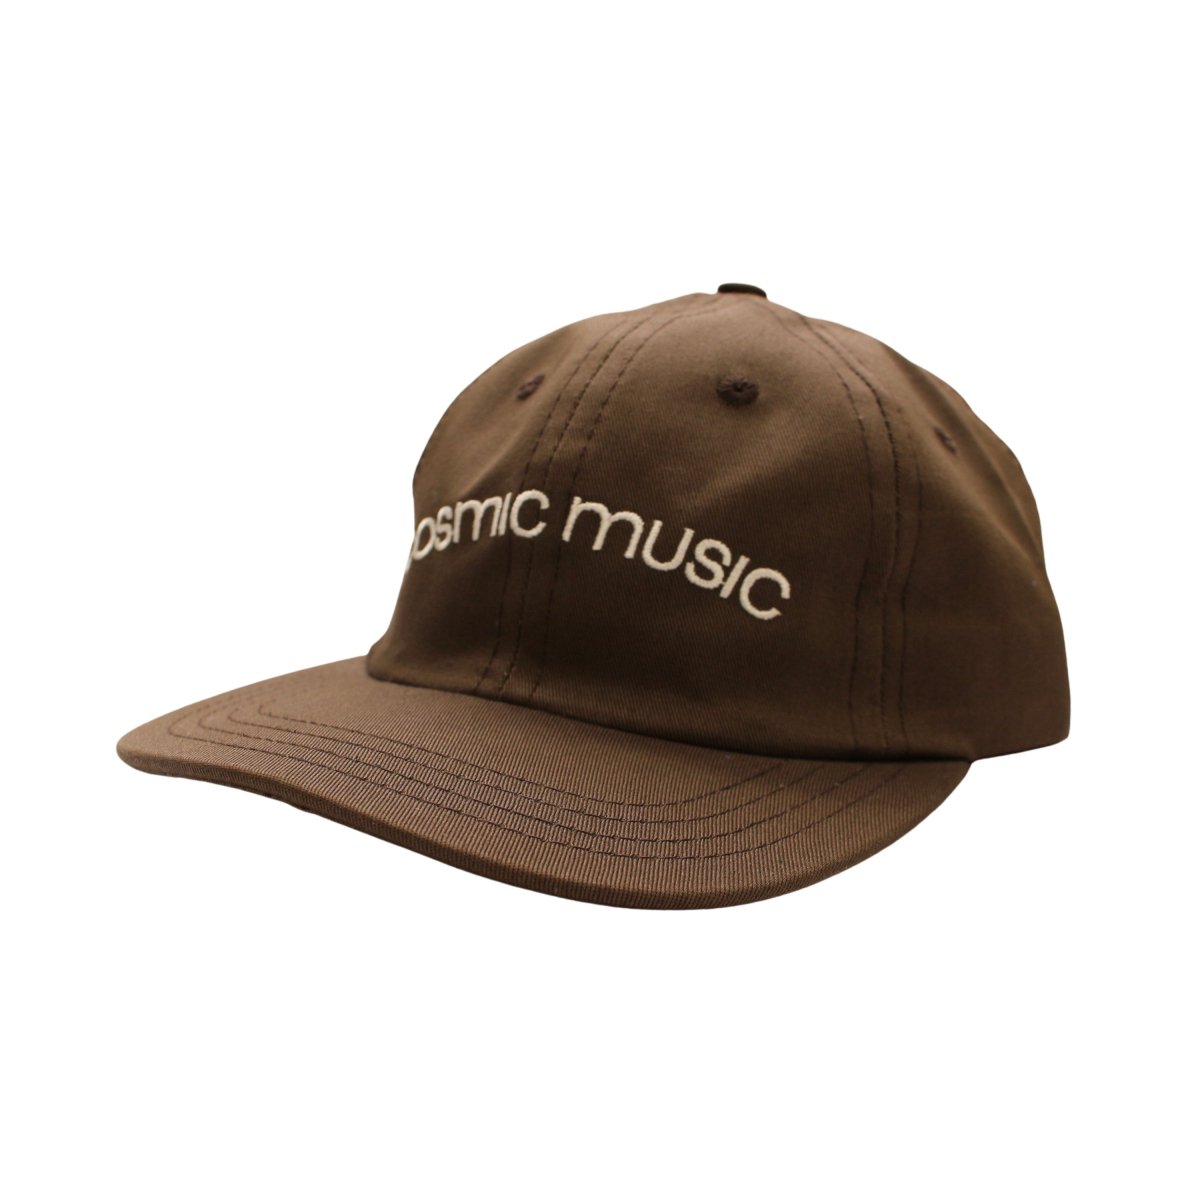 Cosmic Music hat